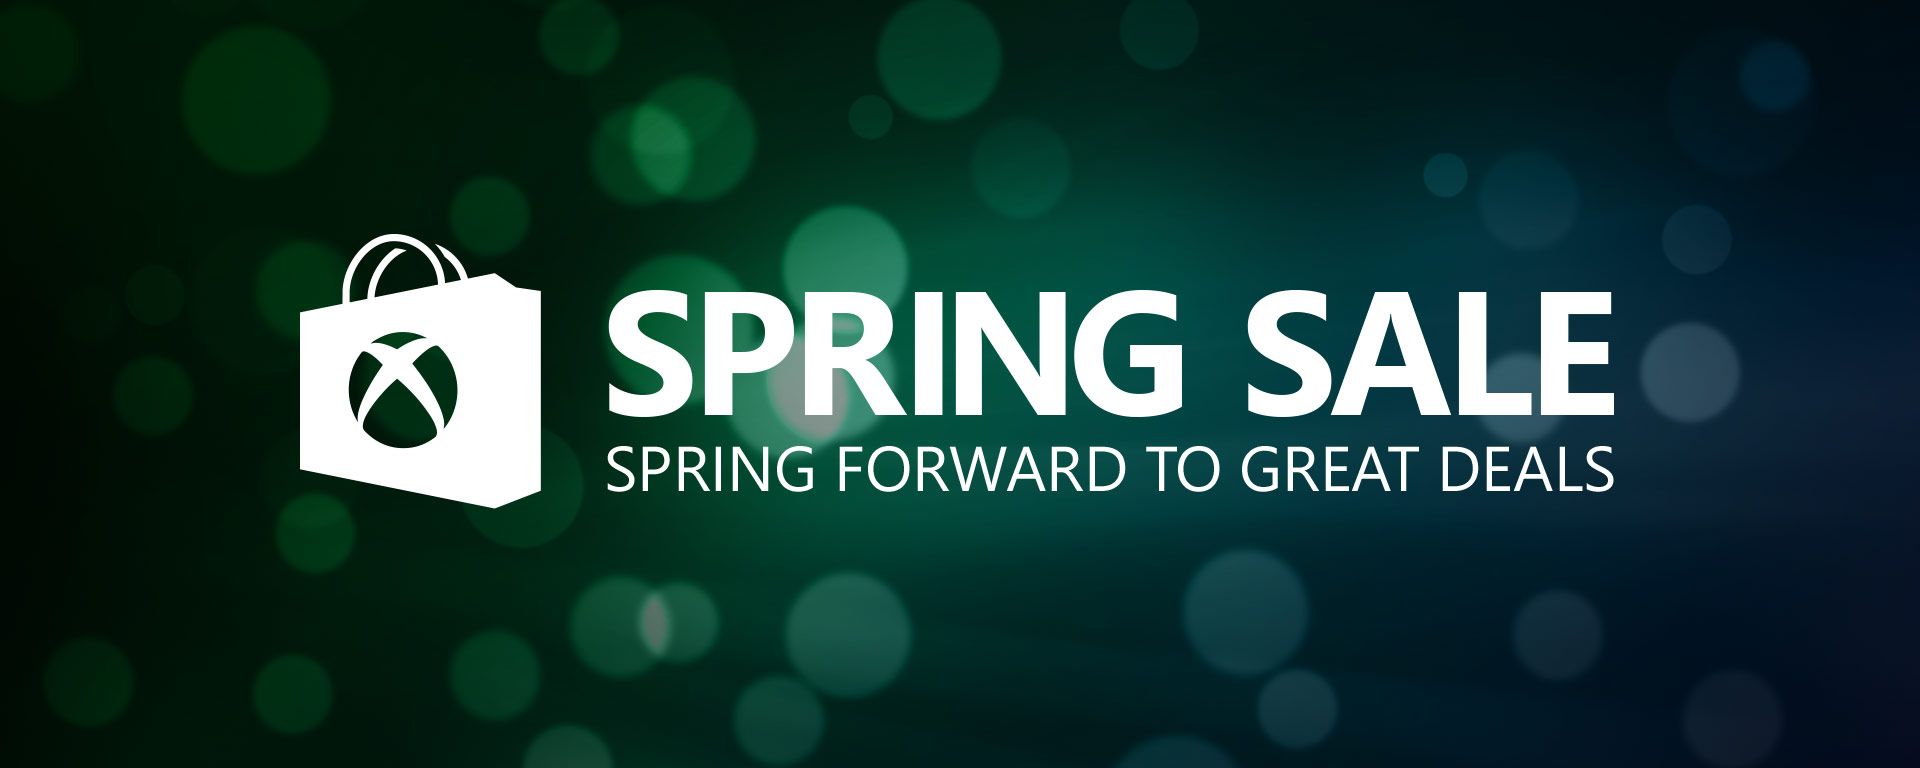 Xbox Spring sale is under way